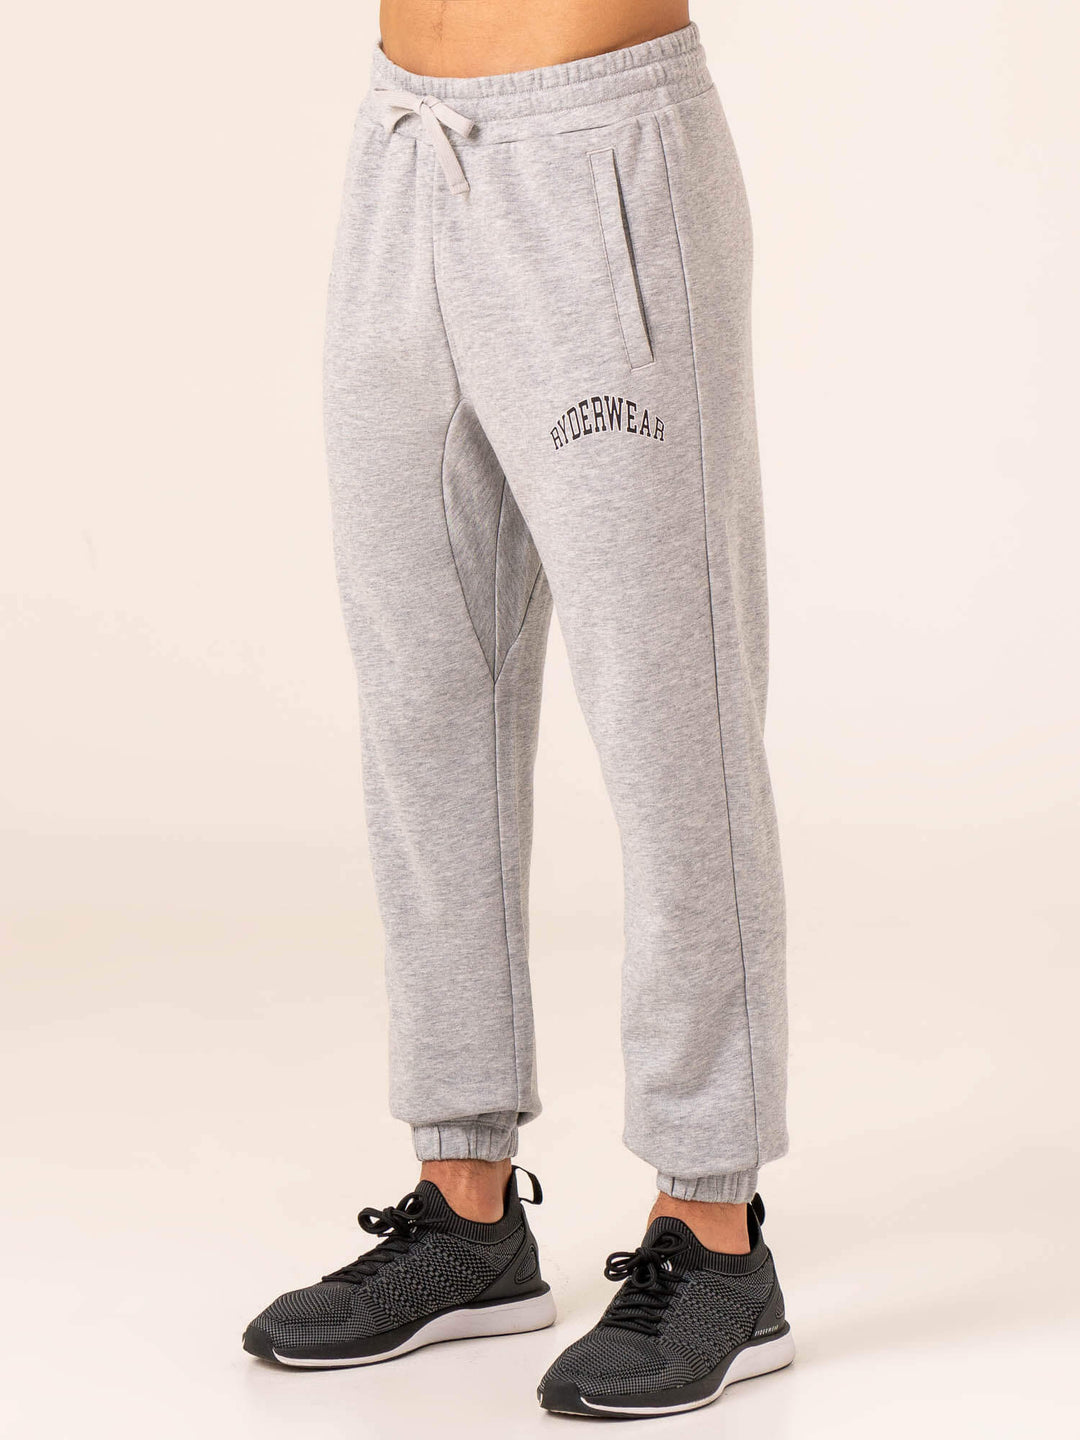 Men's Collegiate Track Pant - Grey Marl Clothing Ryderwear 